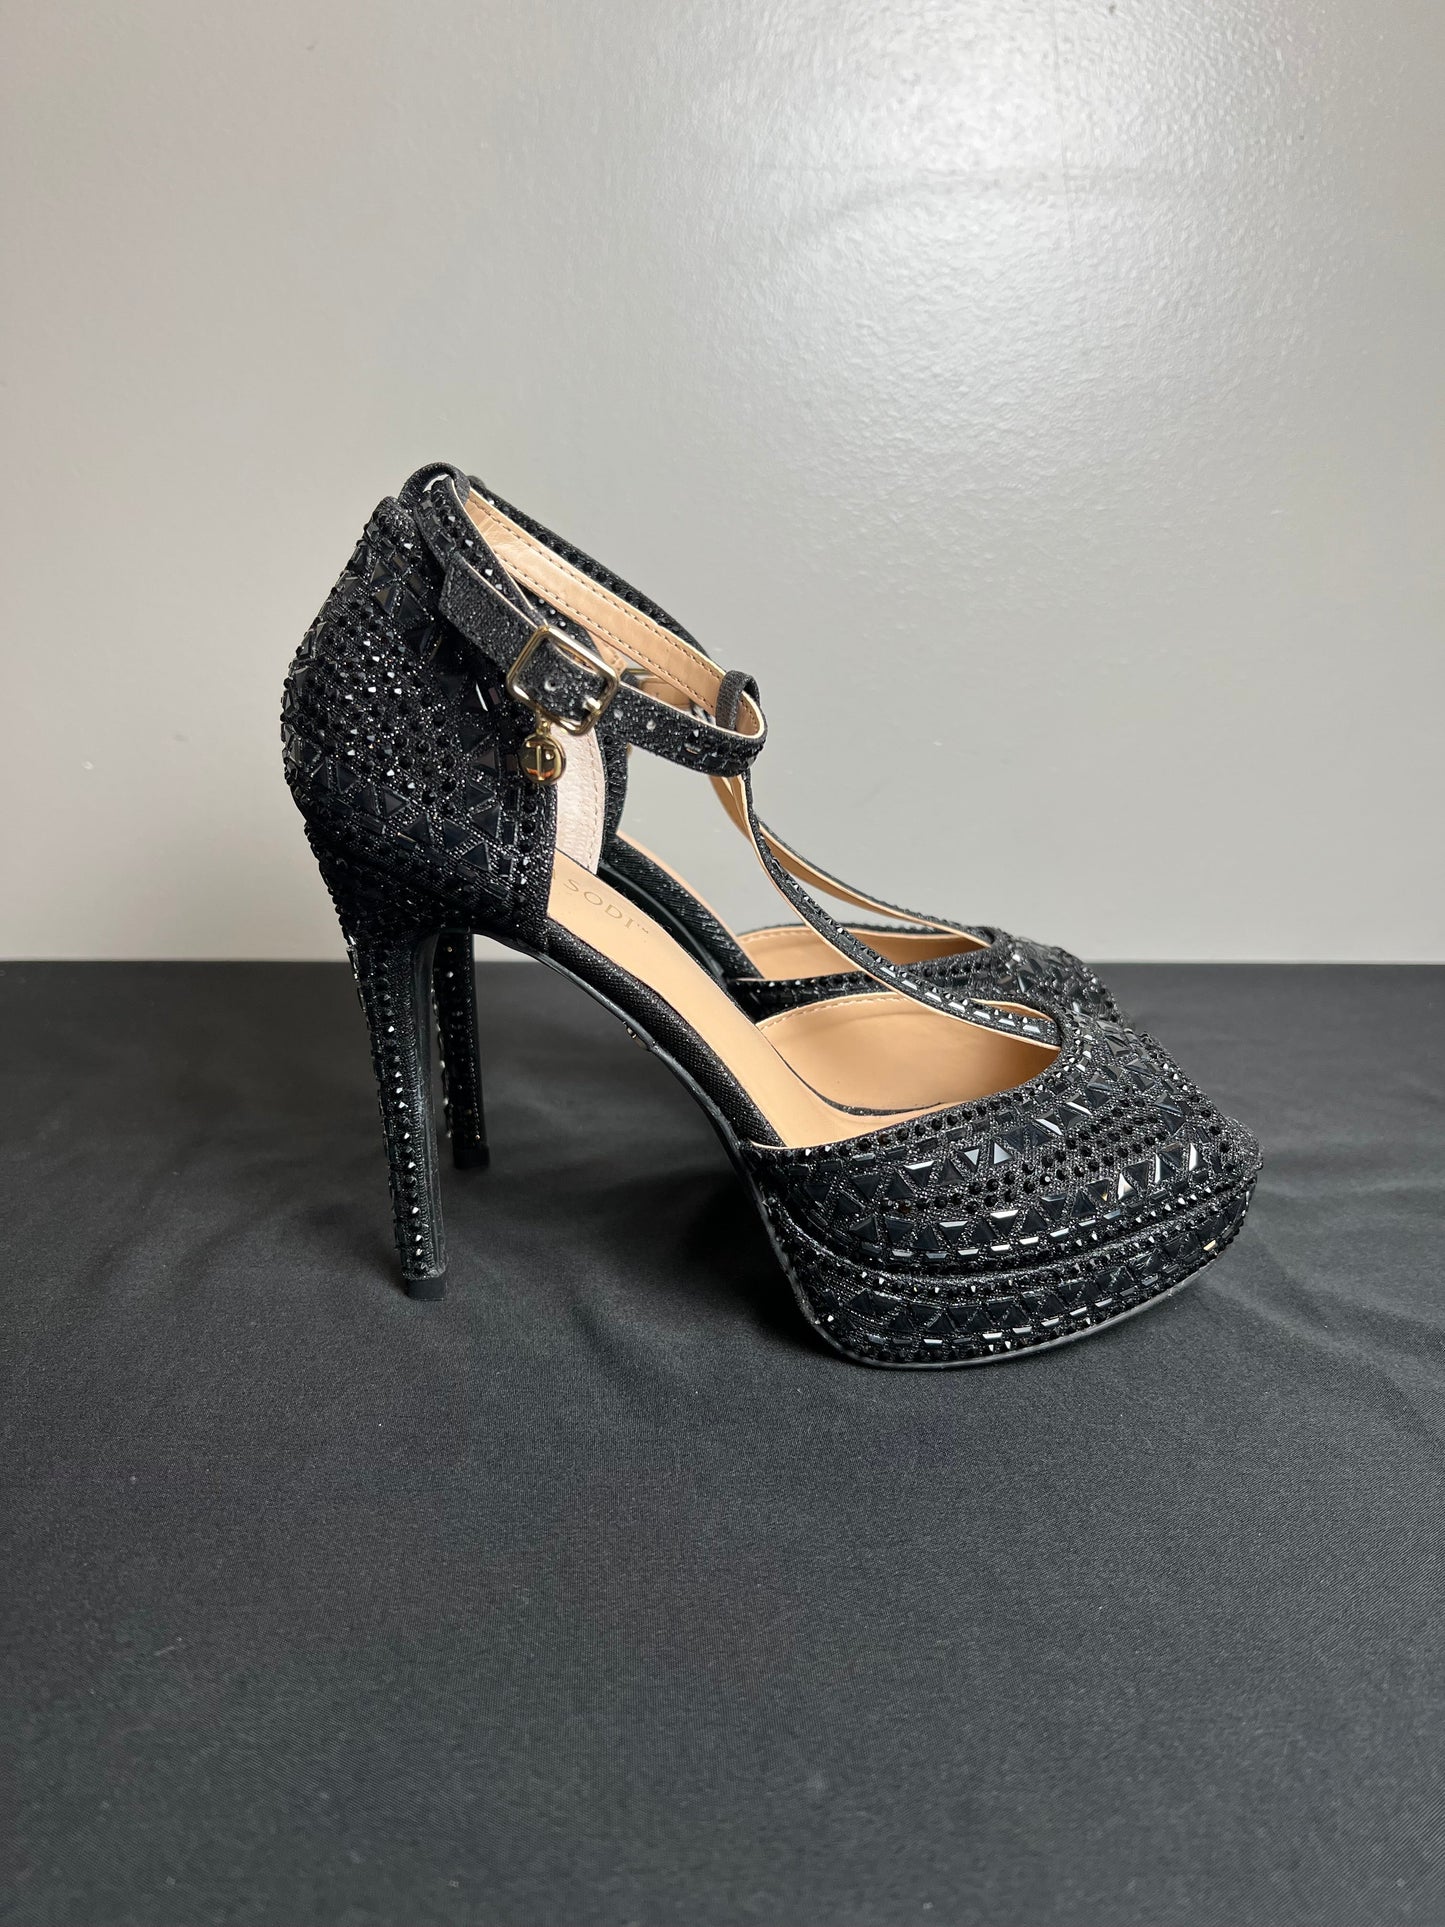 Sandals Heels Stiletto By Thalia Sodi  Size: 8